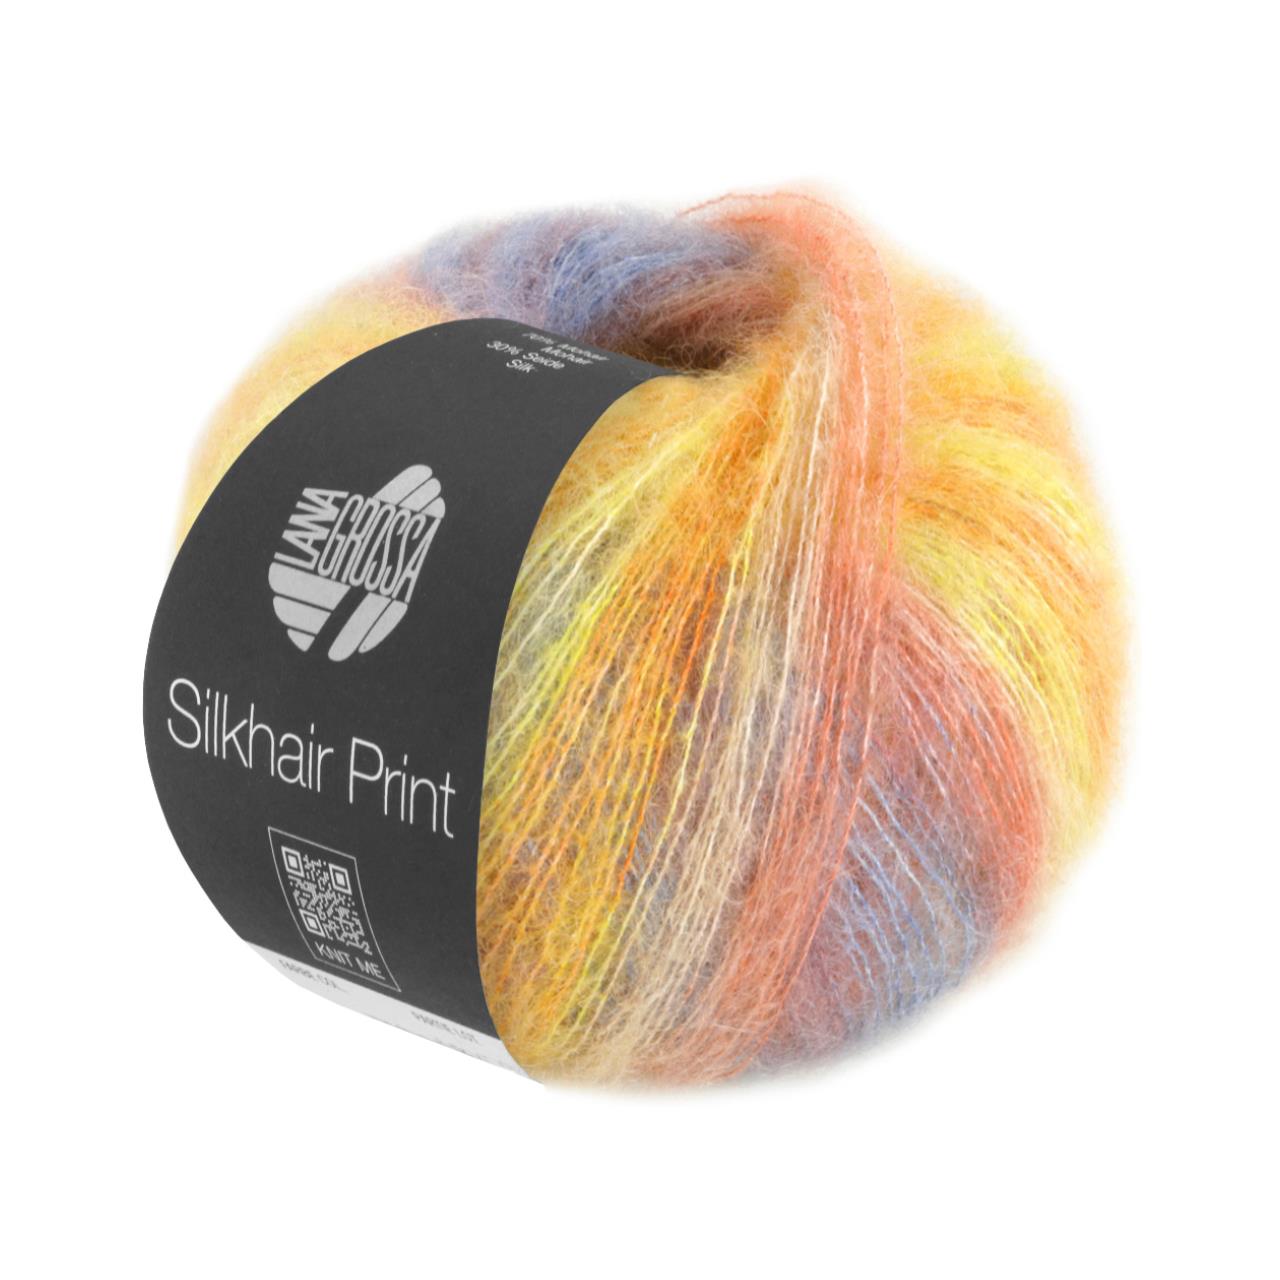 Silkhair Print 423 Gelb/Orange/Graurosa/Jeans/Rosabeige/Lachs